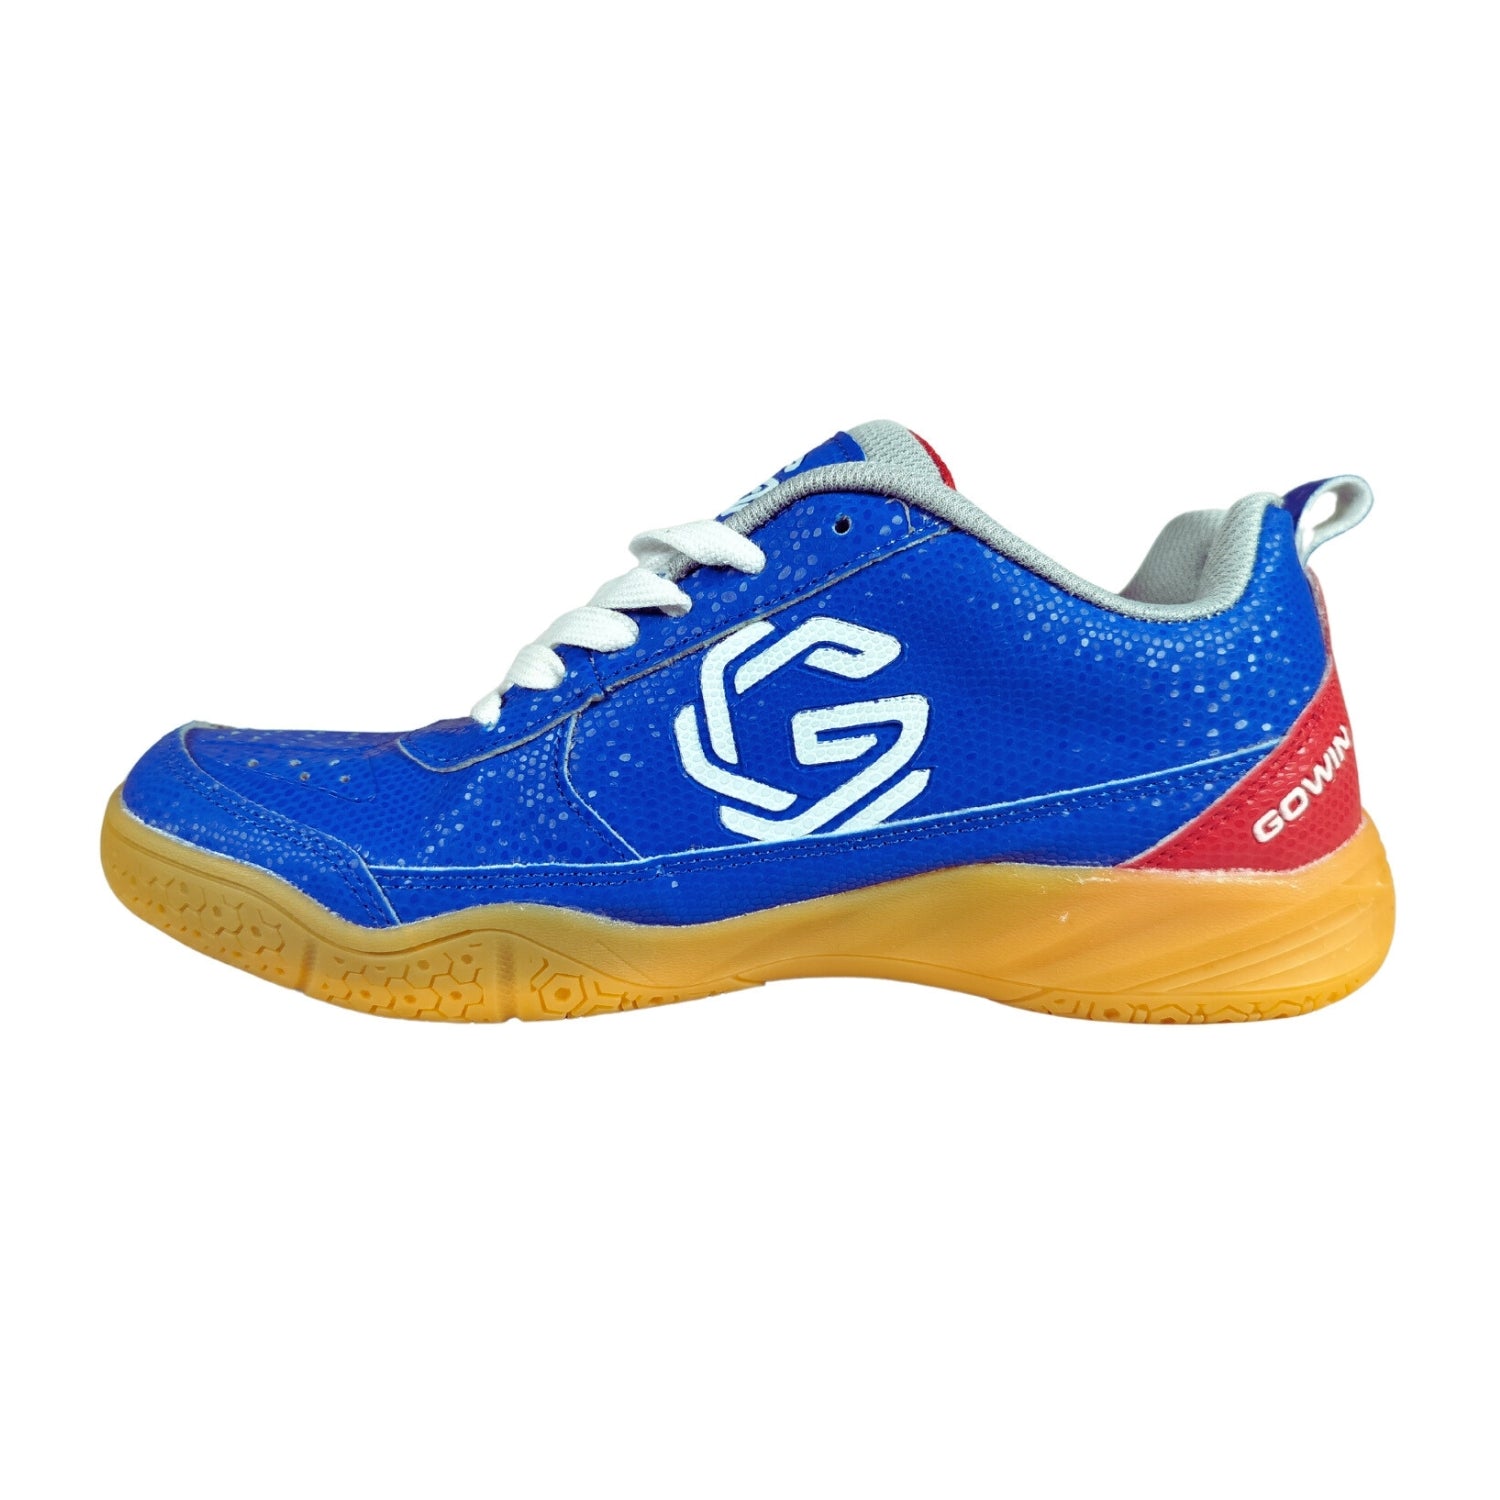 Gowin Smash 2.0 Badminton Shoe - Best Price online Prokicksports.com